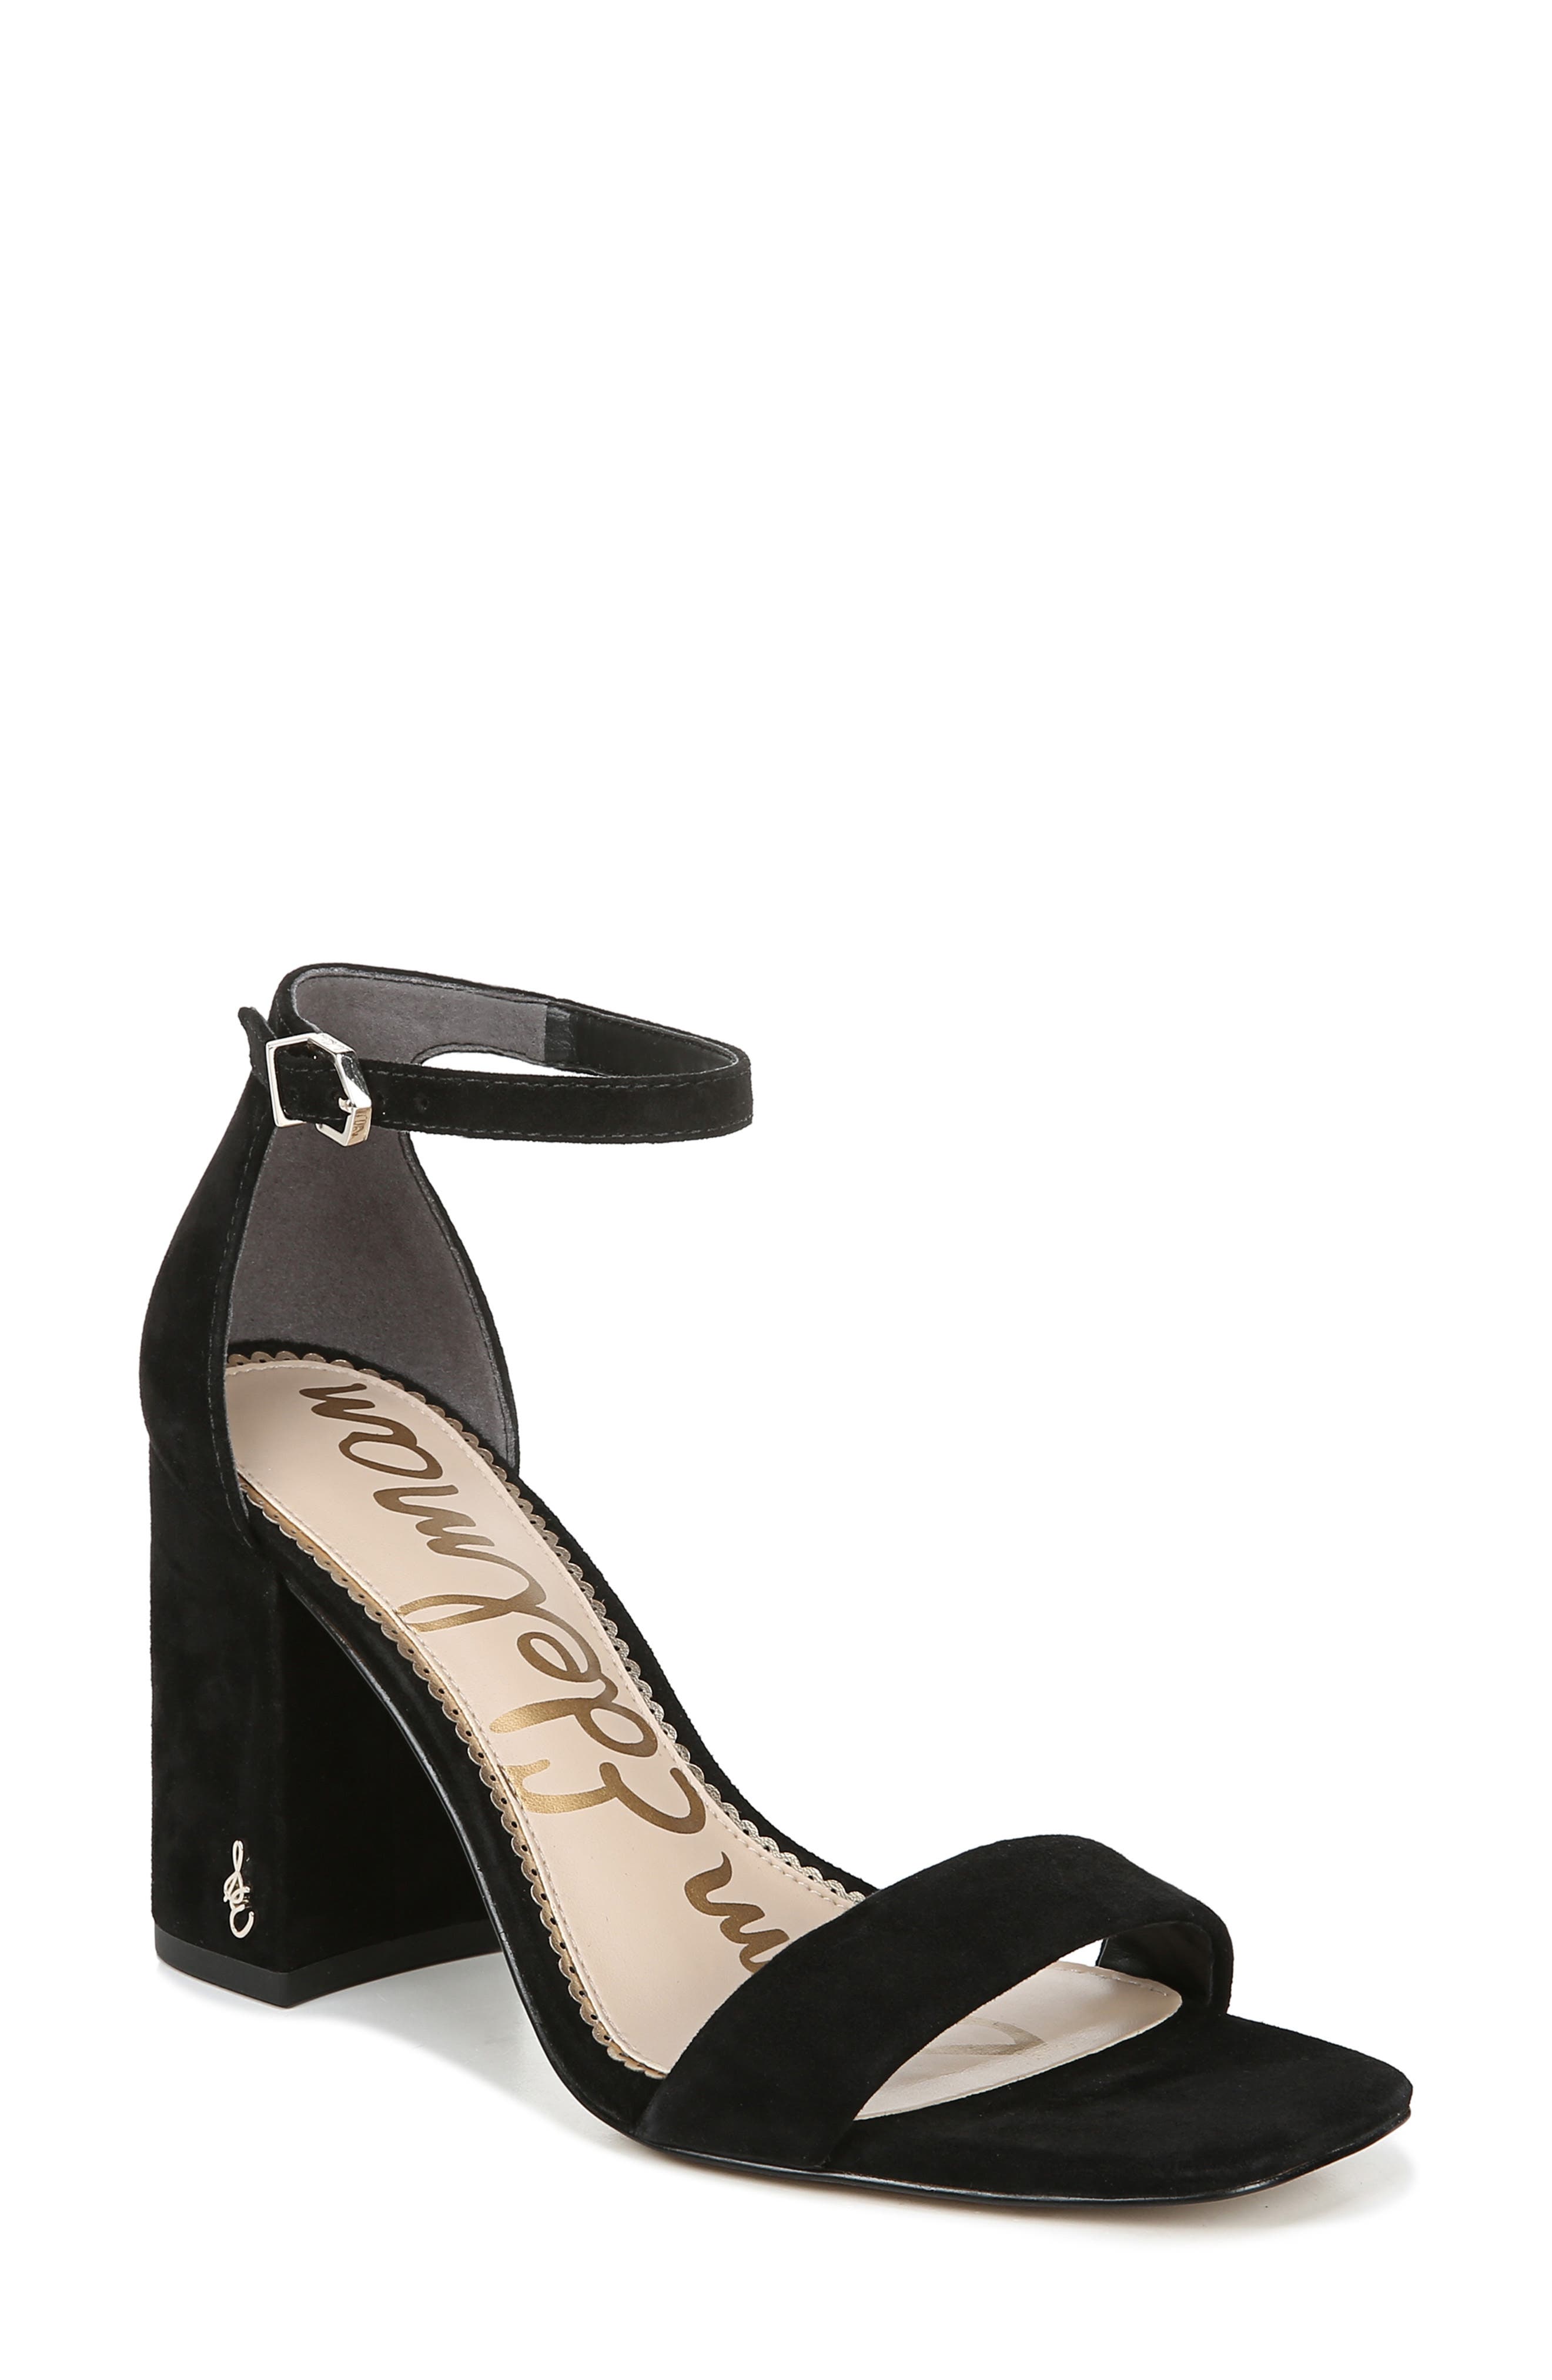 sam edelman black and white heels